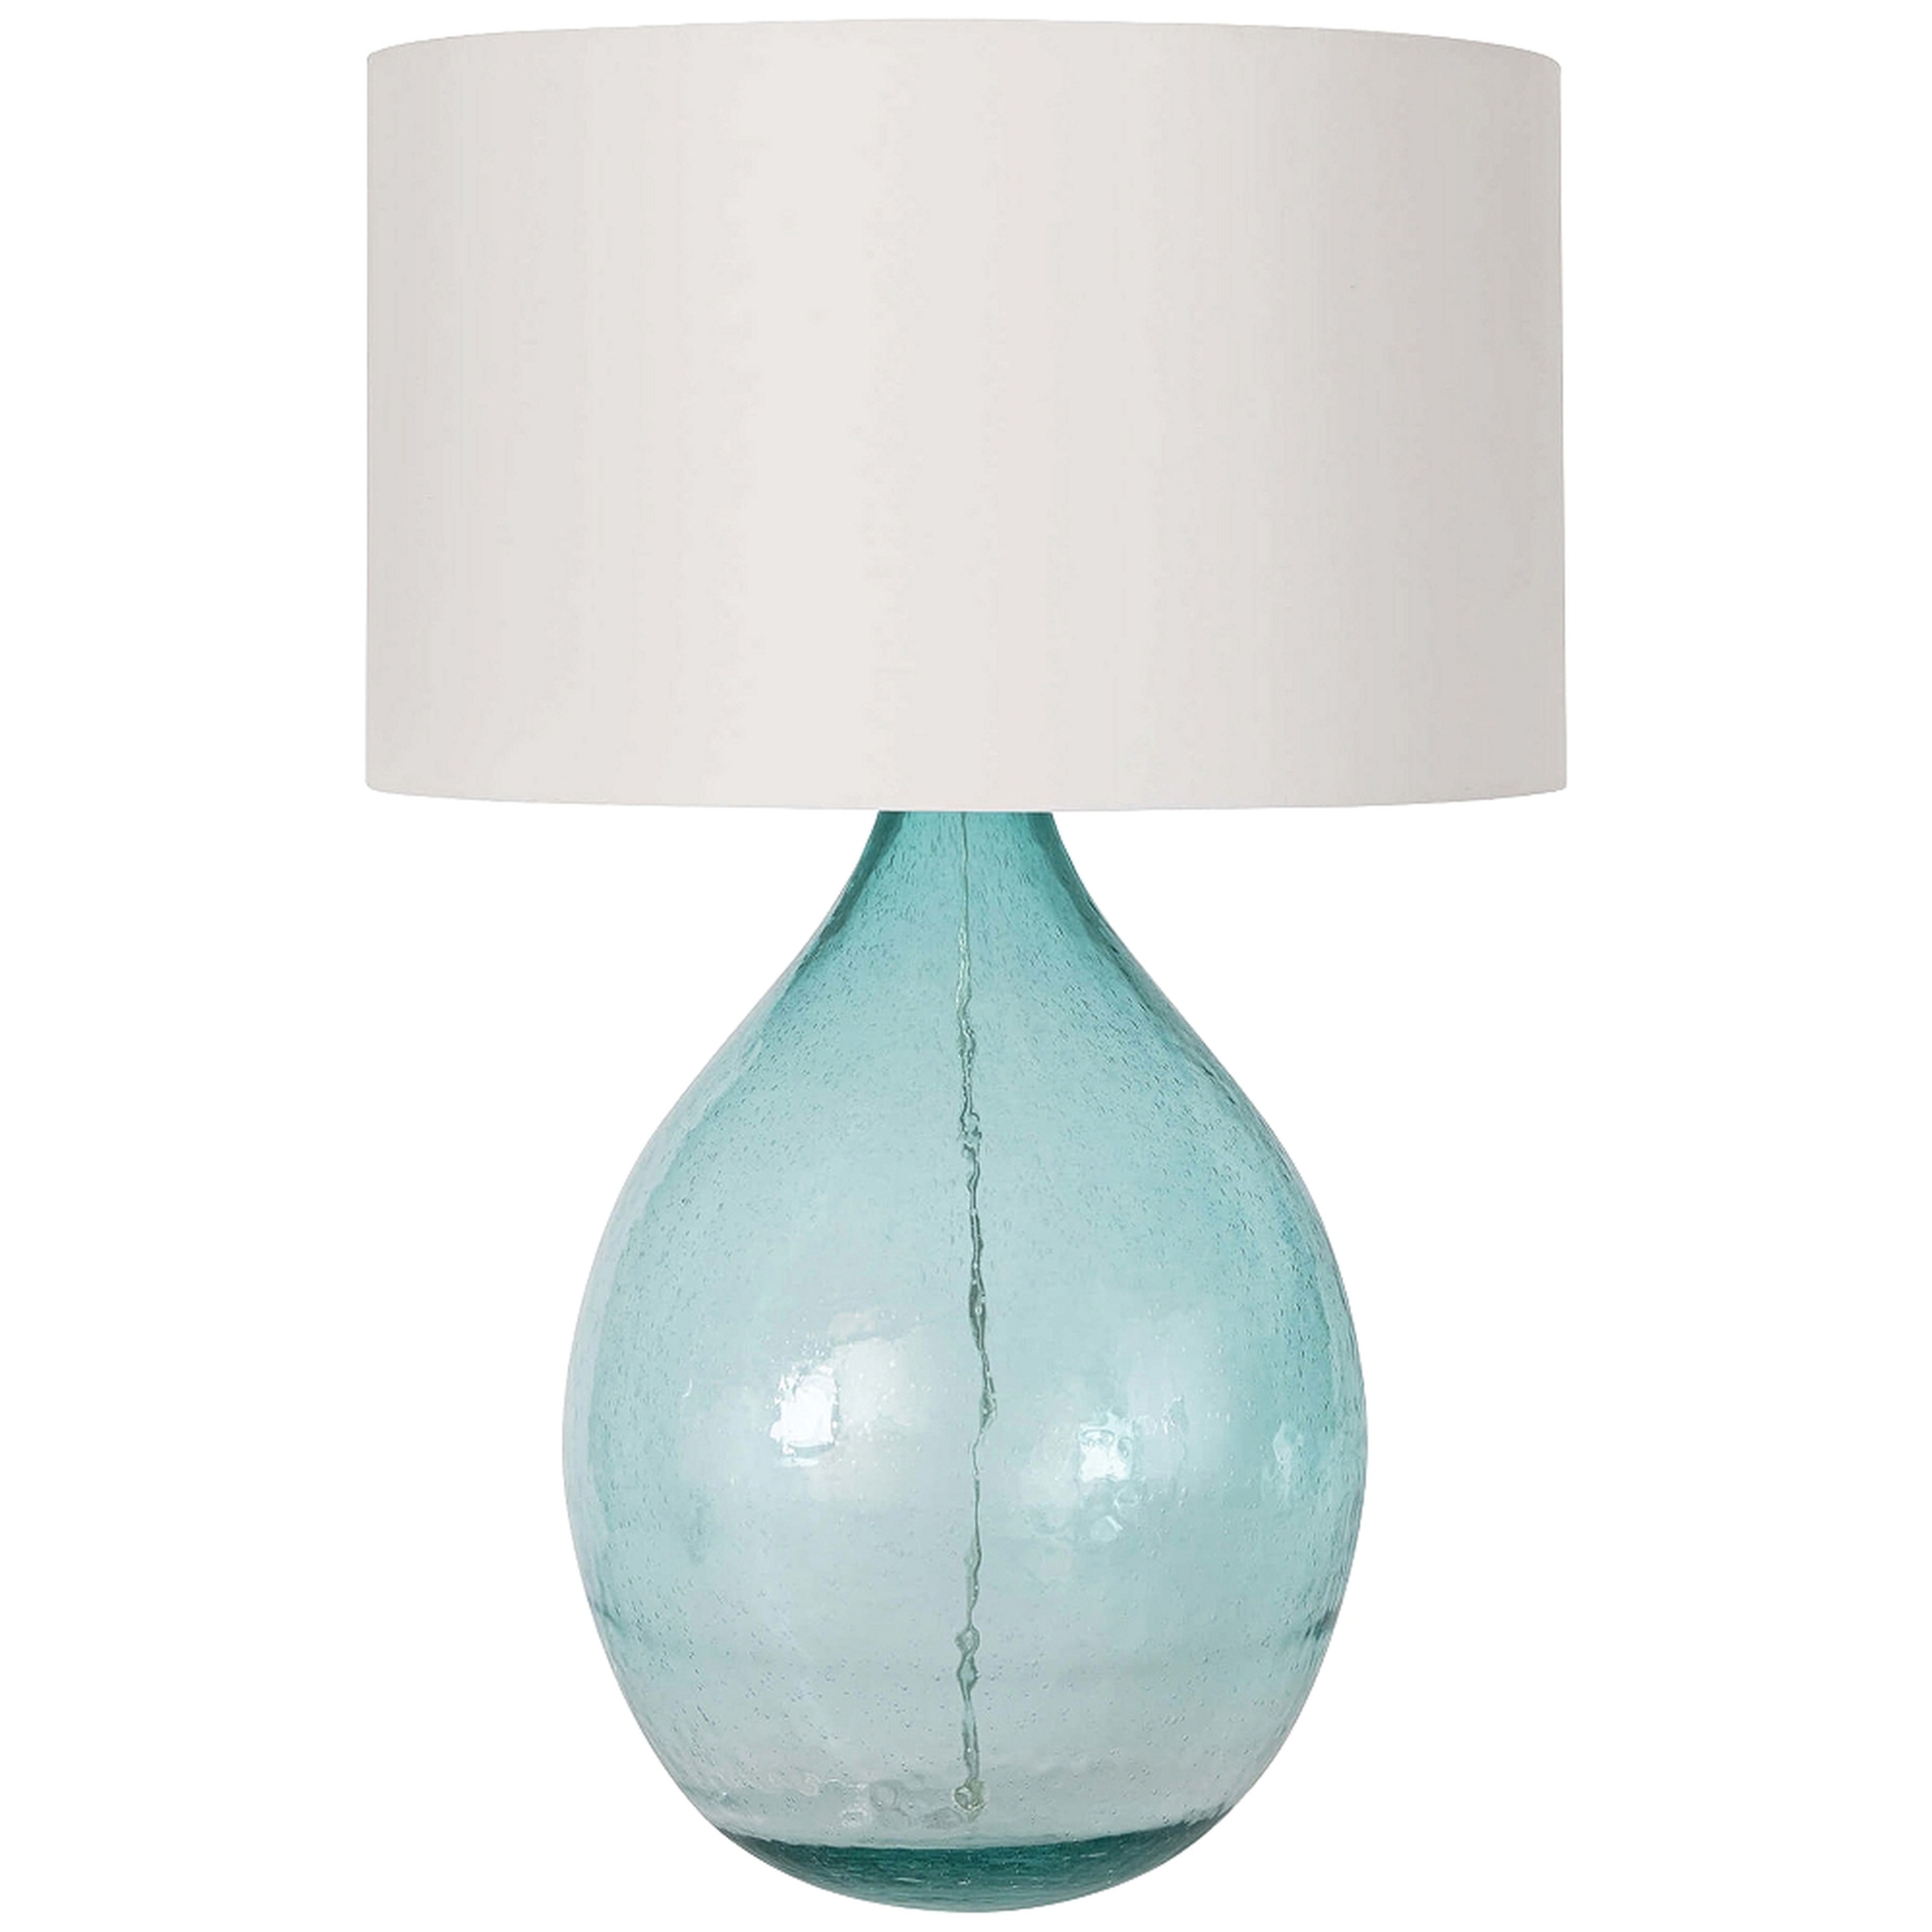 Regina Andrew Design Catalina Blue Glass Table Lamp - Style # 86V52 - Lamps Plus